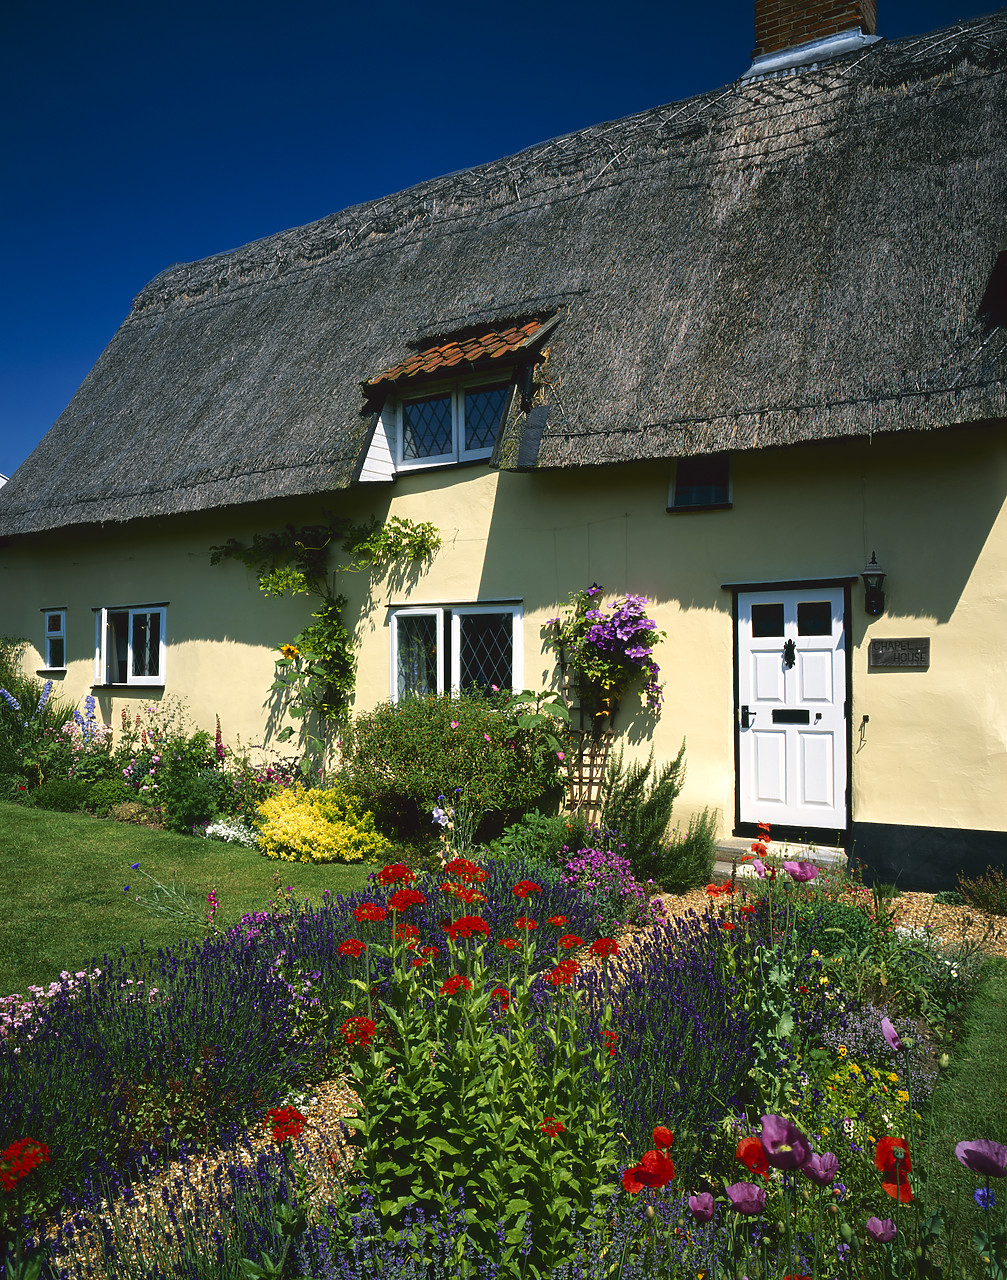 #030134-8 - Thatched Cottage & Garden, Redgrave, Suffolk, England